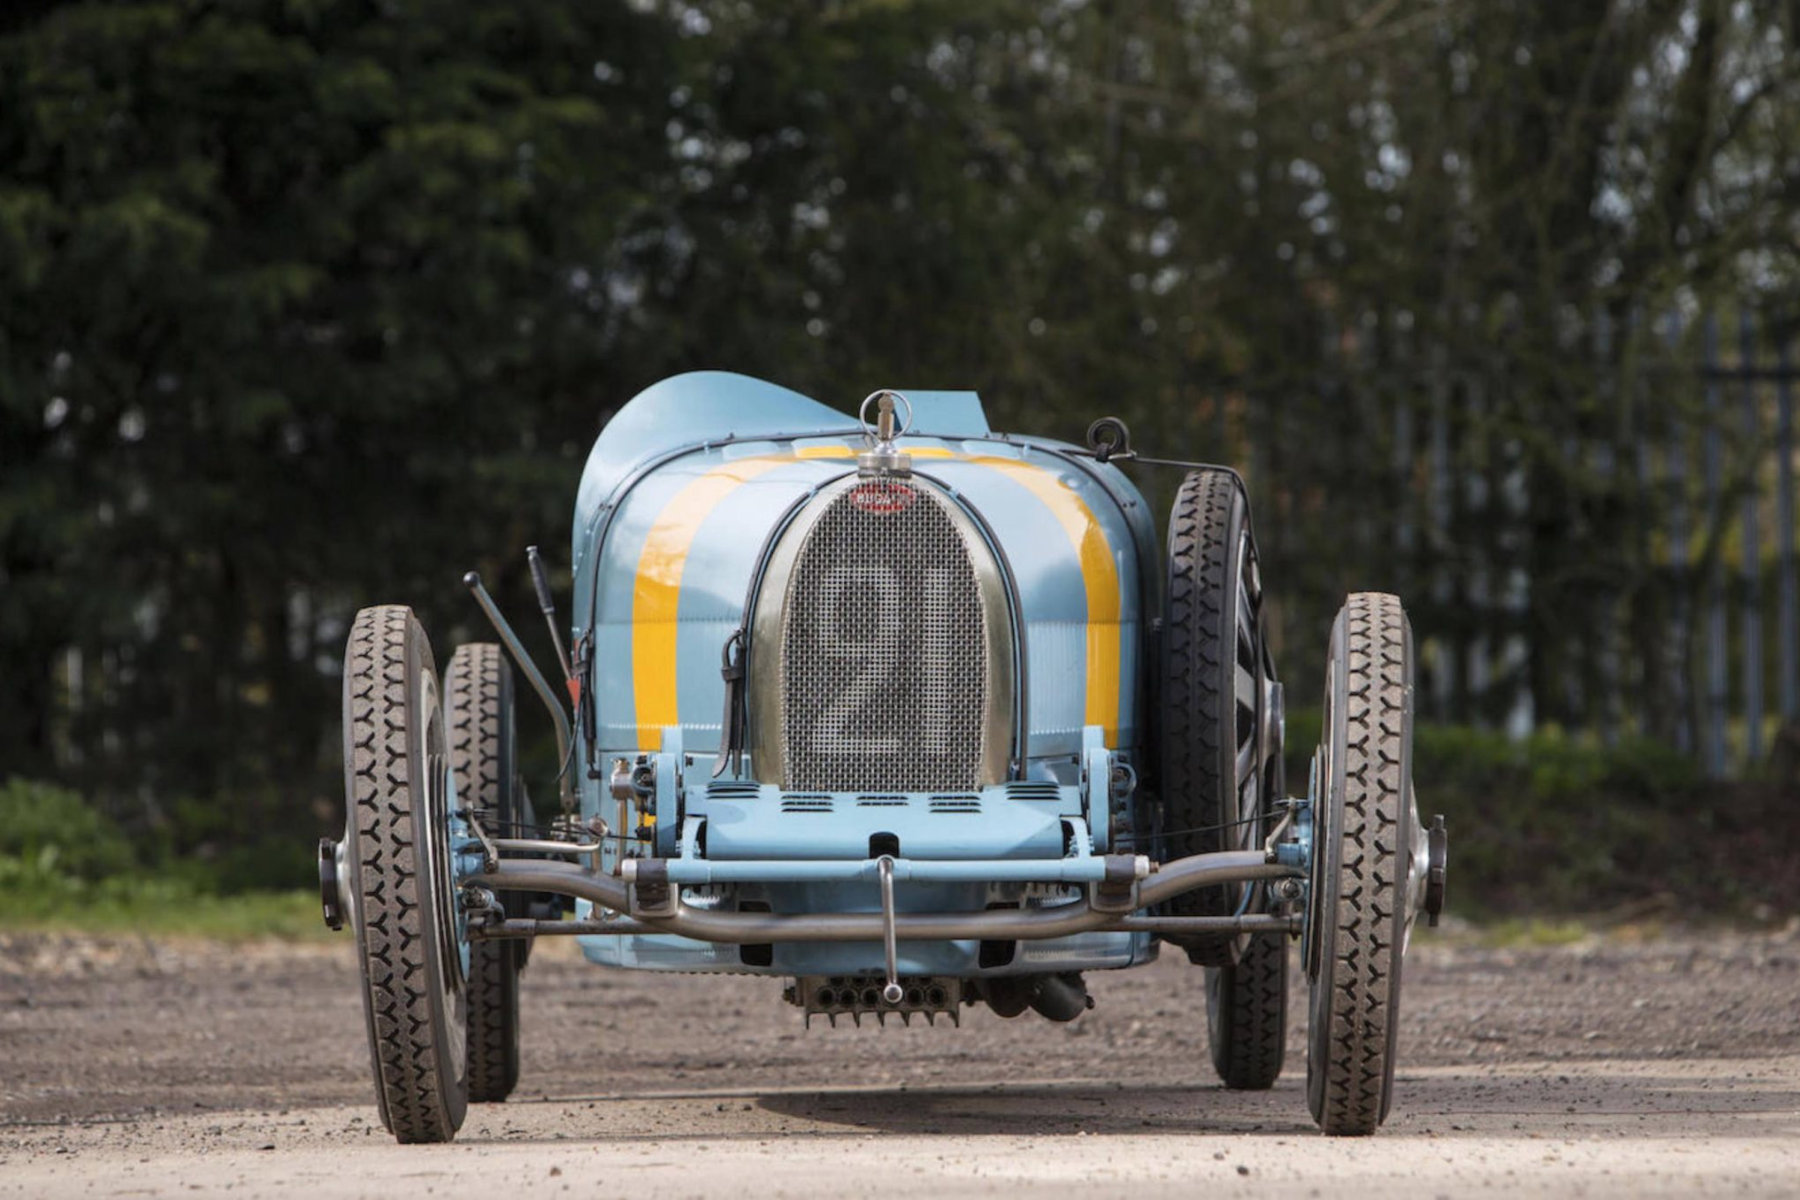 The Bugatti Type 35 race car